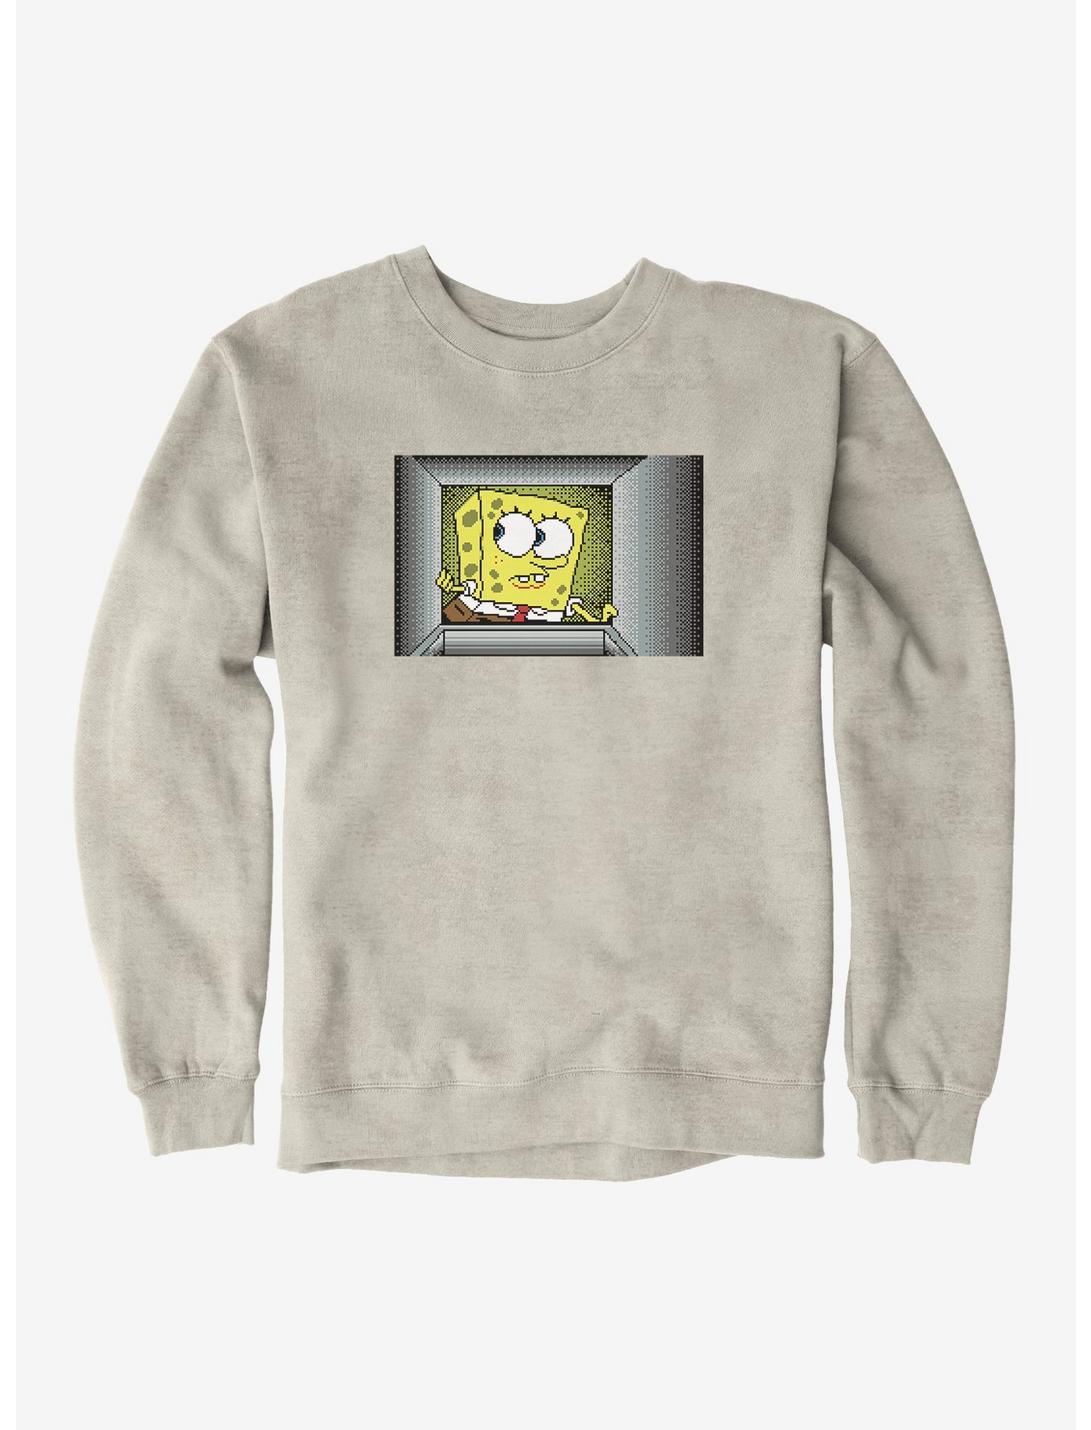 SpongeBob SquarePants Searching Sweatshirt, , hi-res